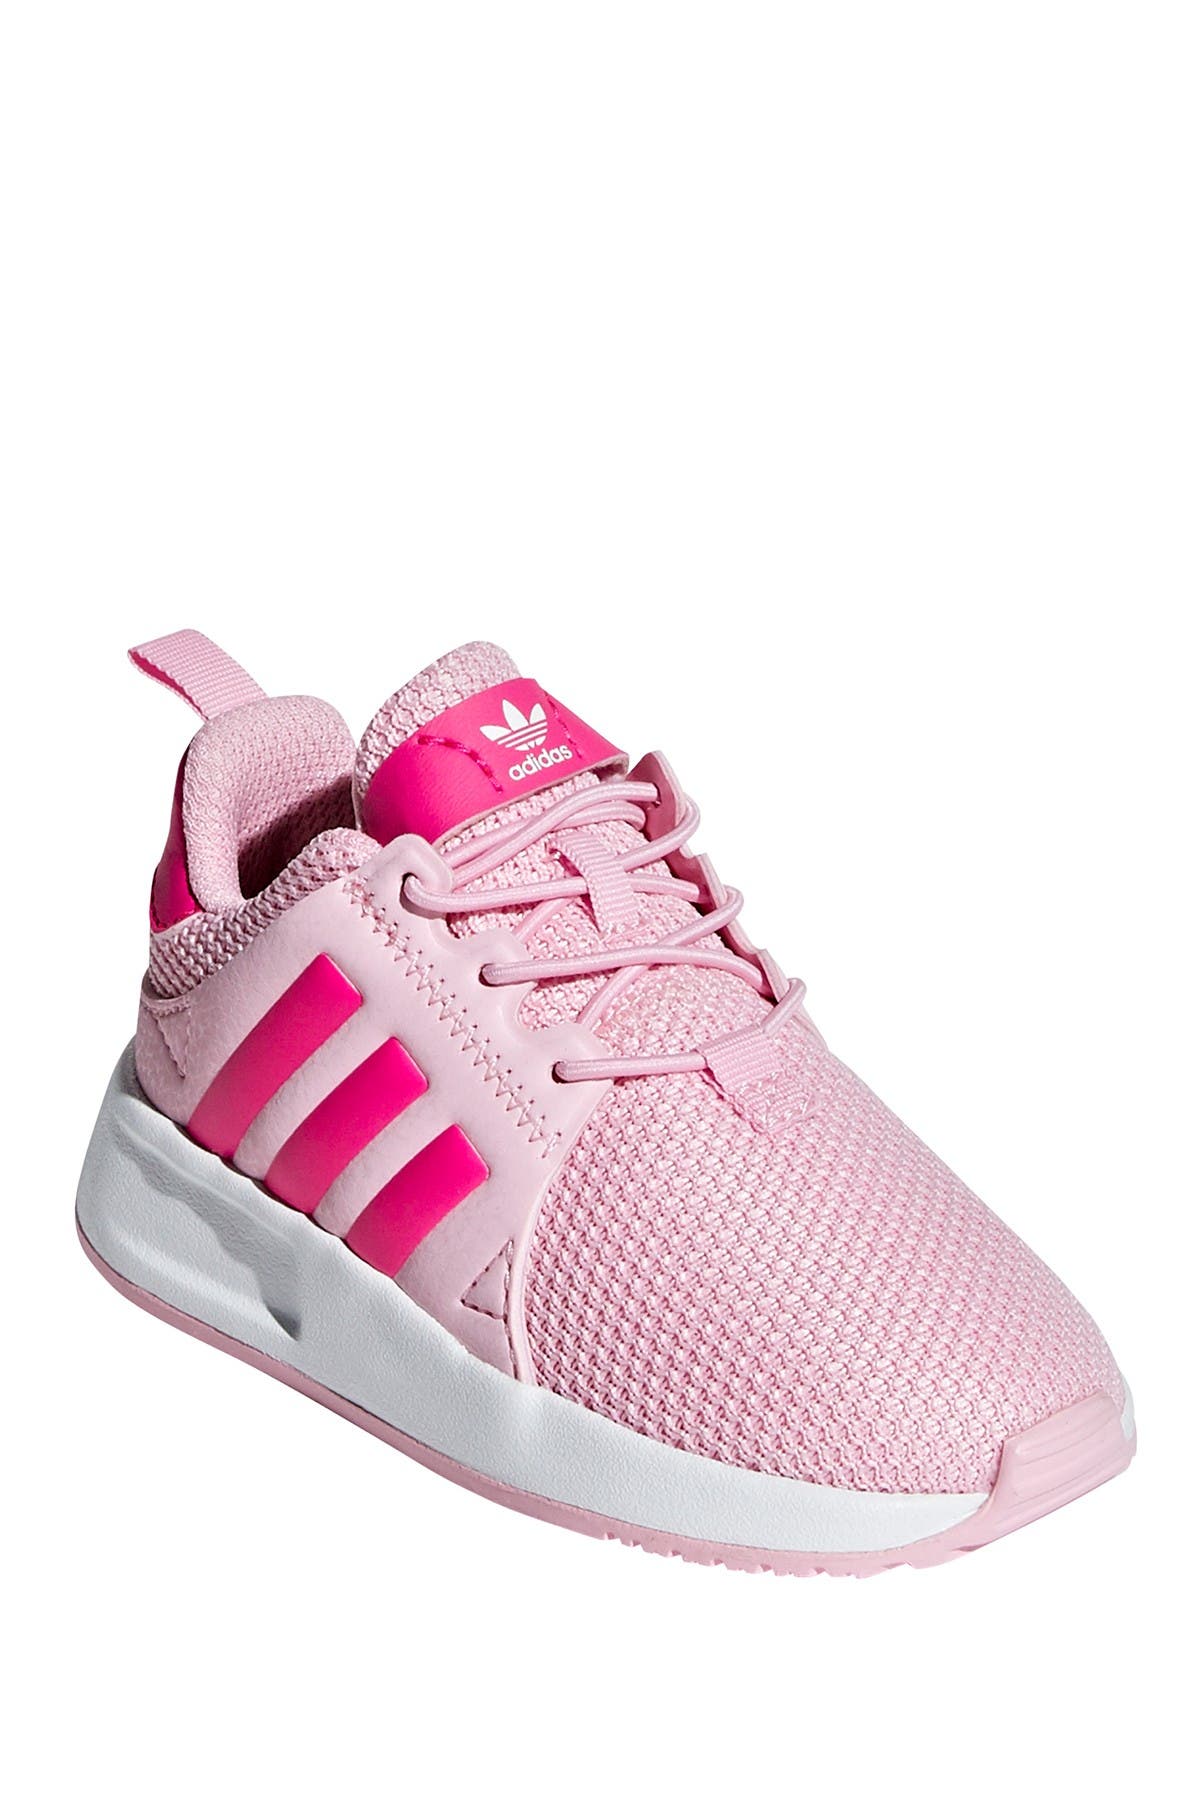 adidas x_plr toddler pink